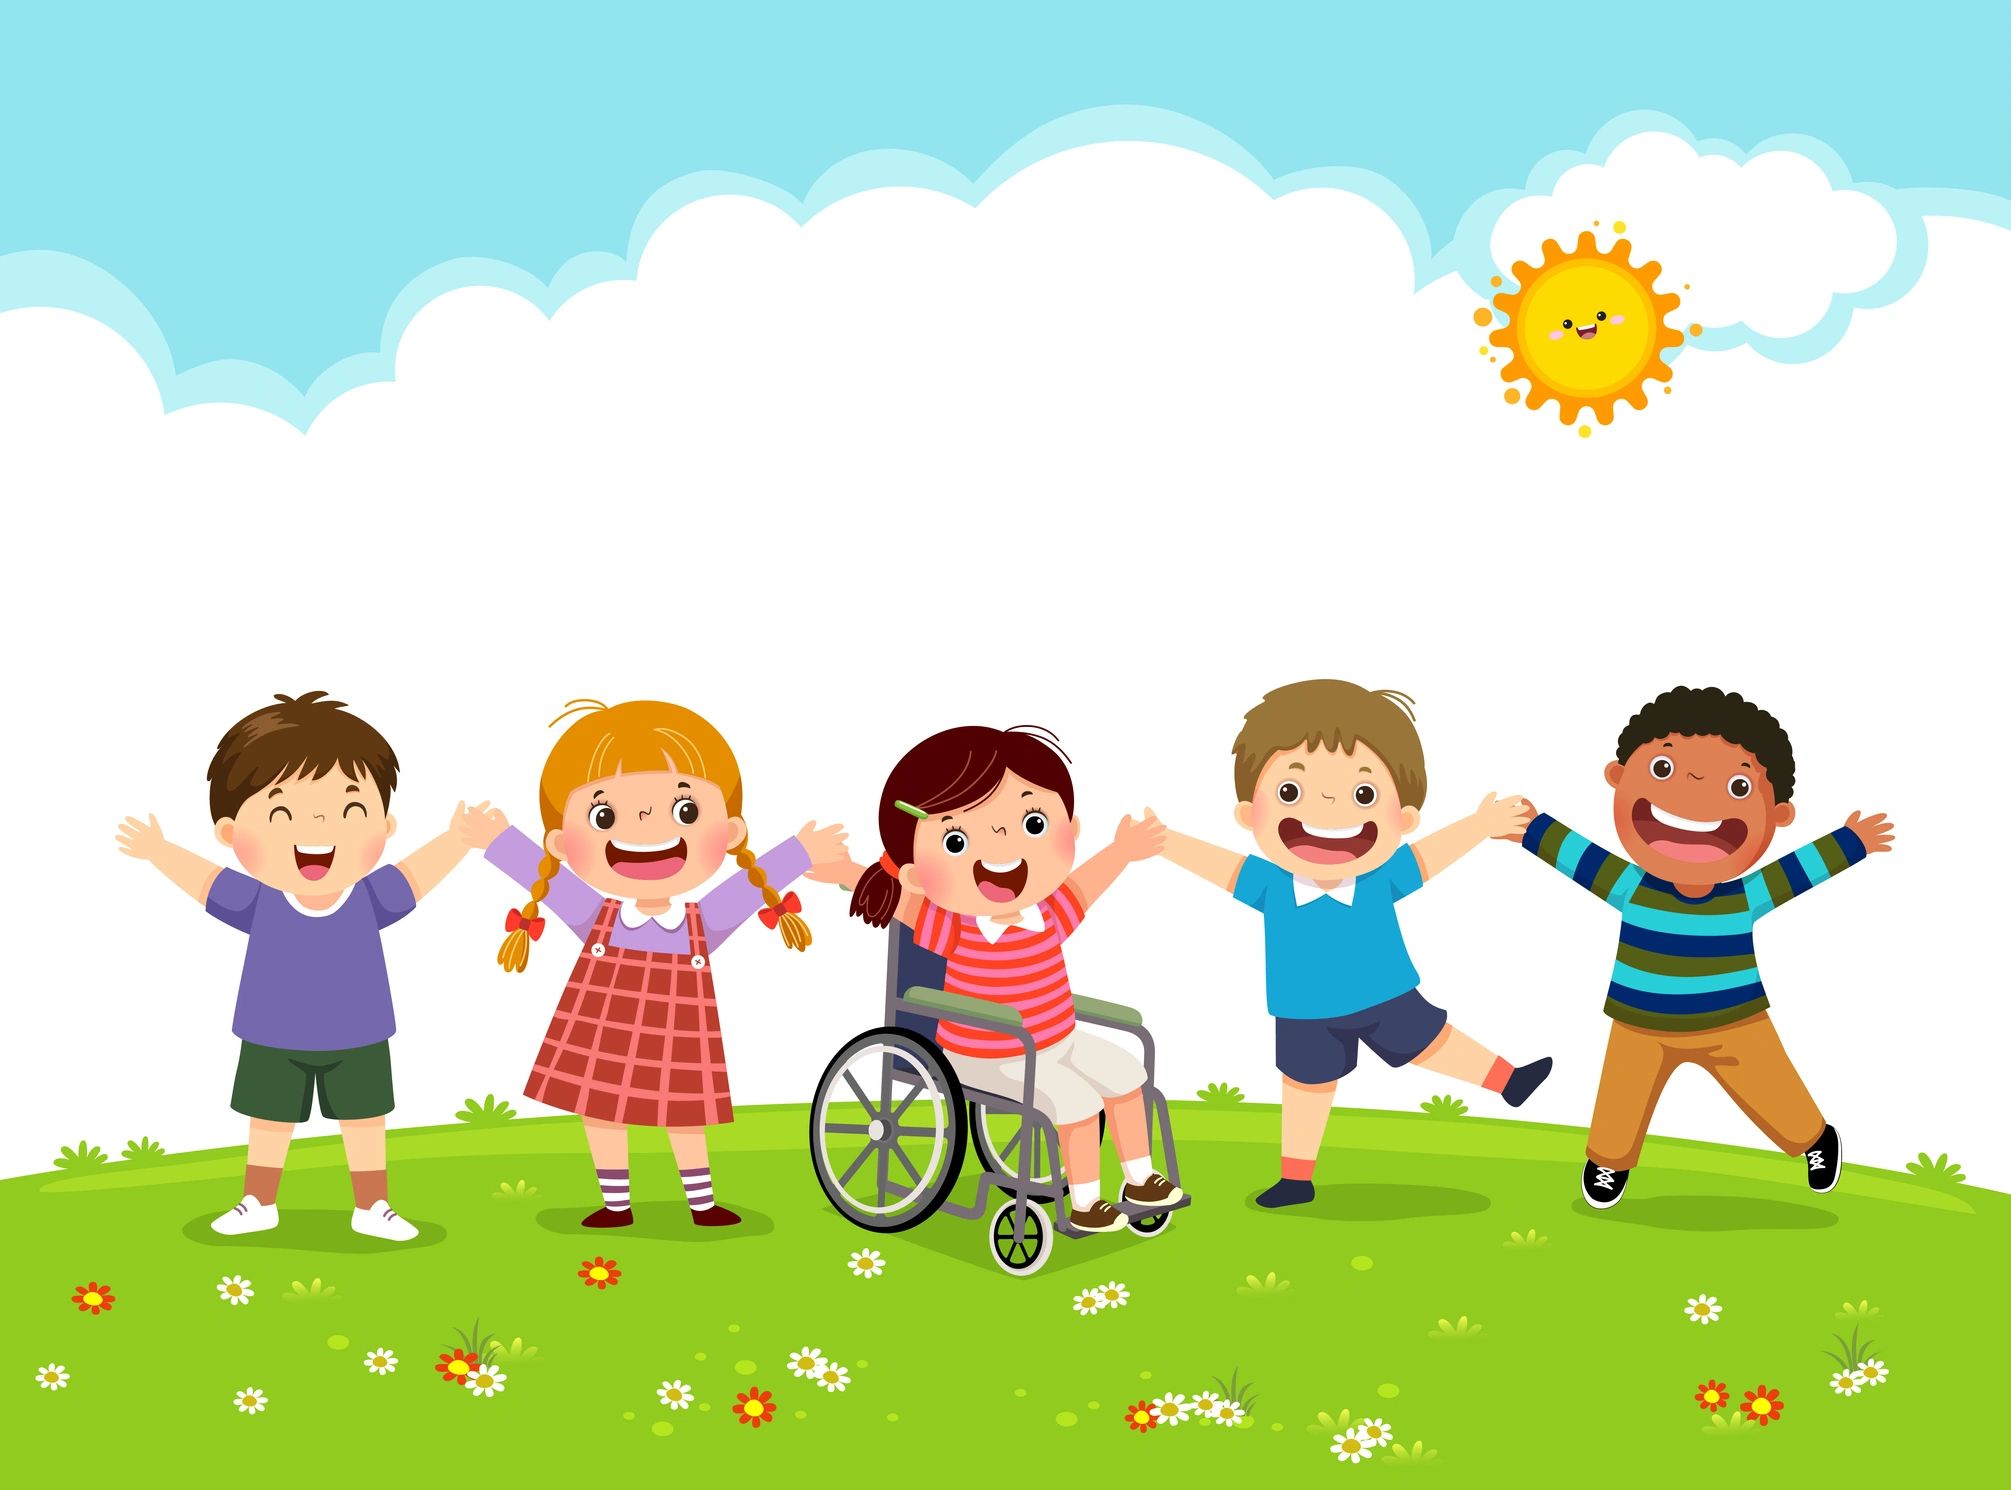 A digital illustration of children being happy 